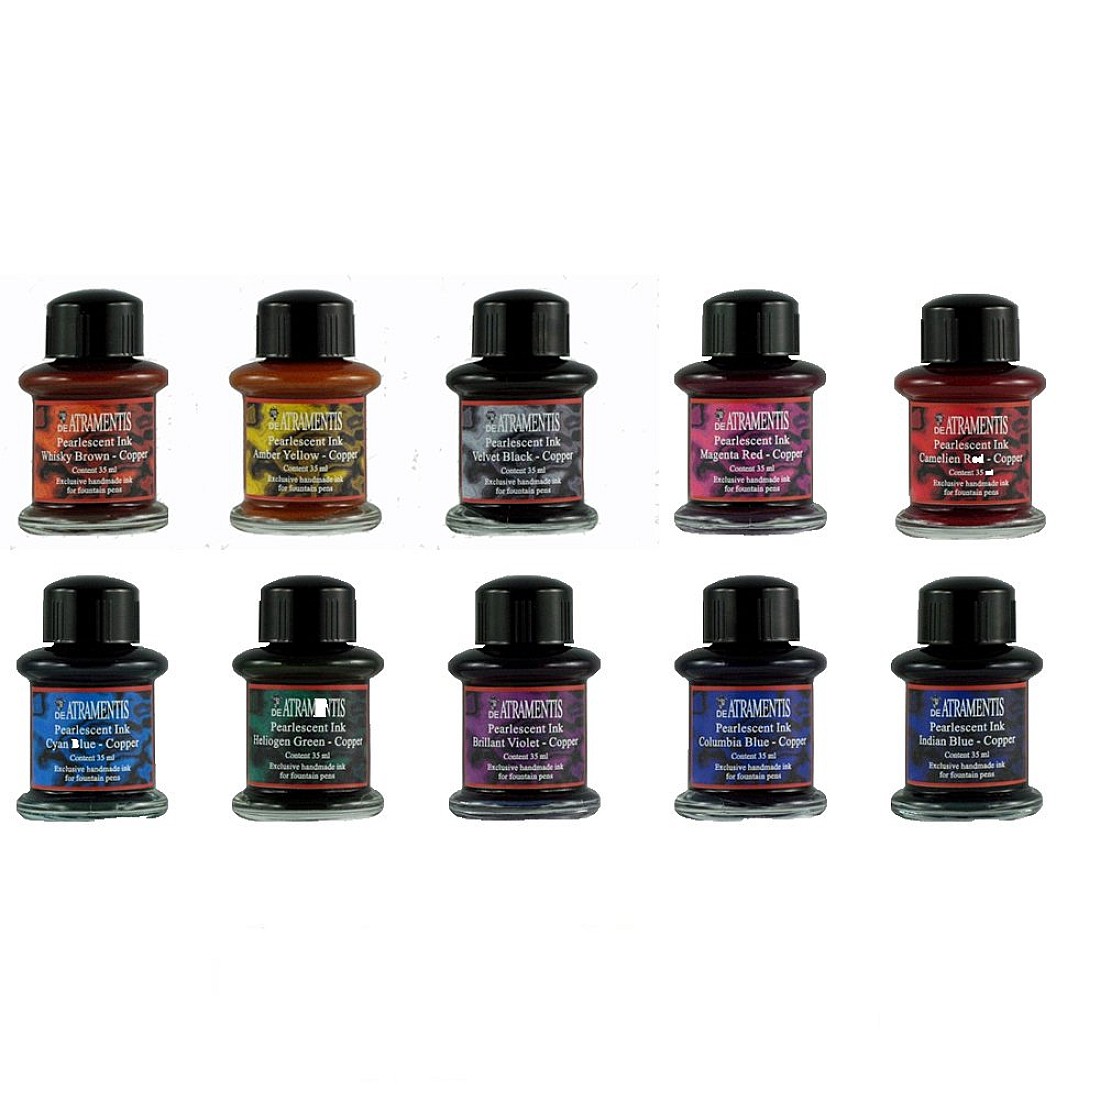 De Atramentis Pearlescent Copper Ink - Ink Bottle (10 colors)